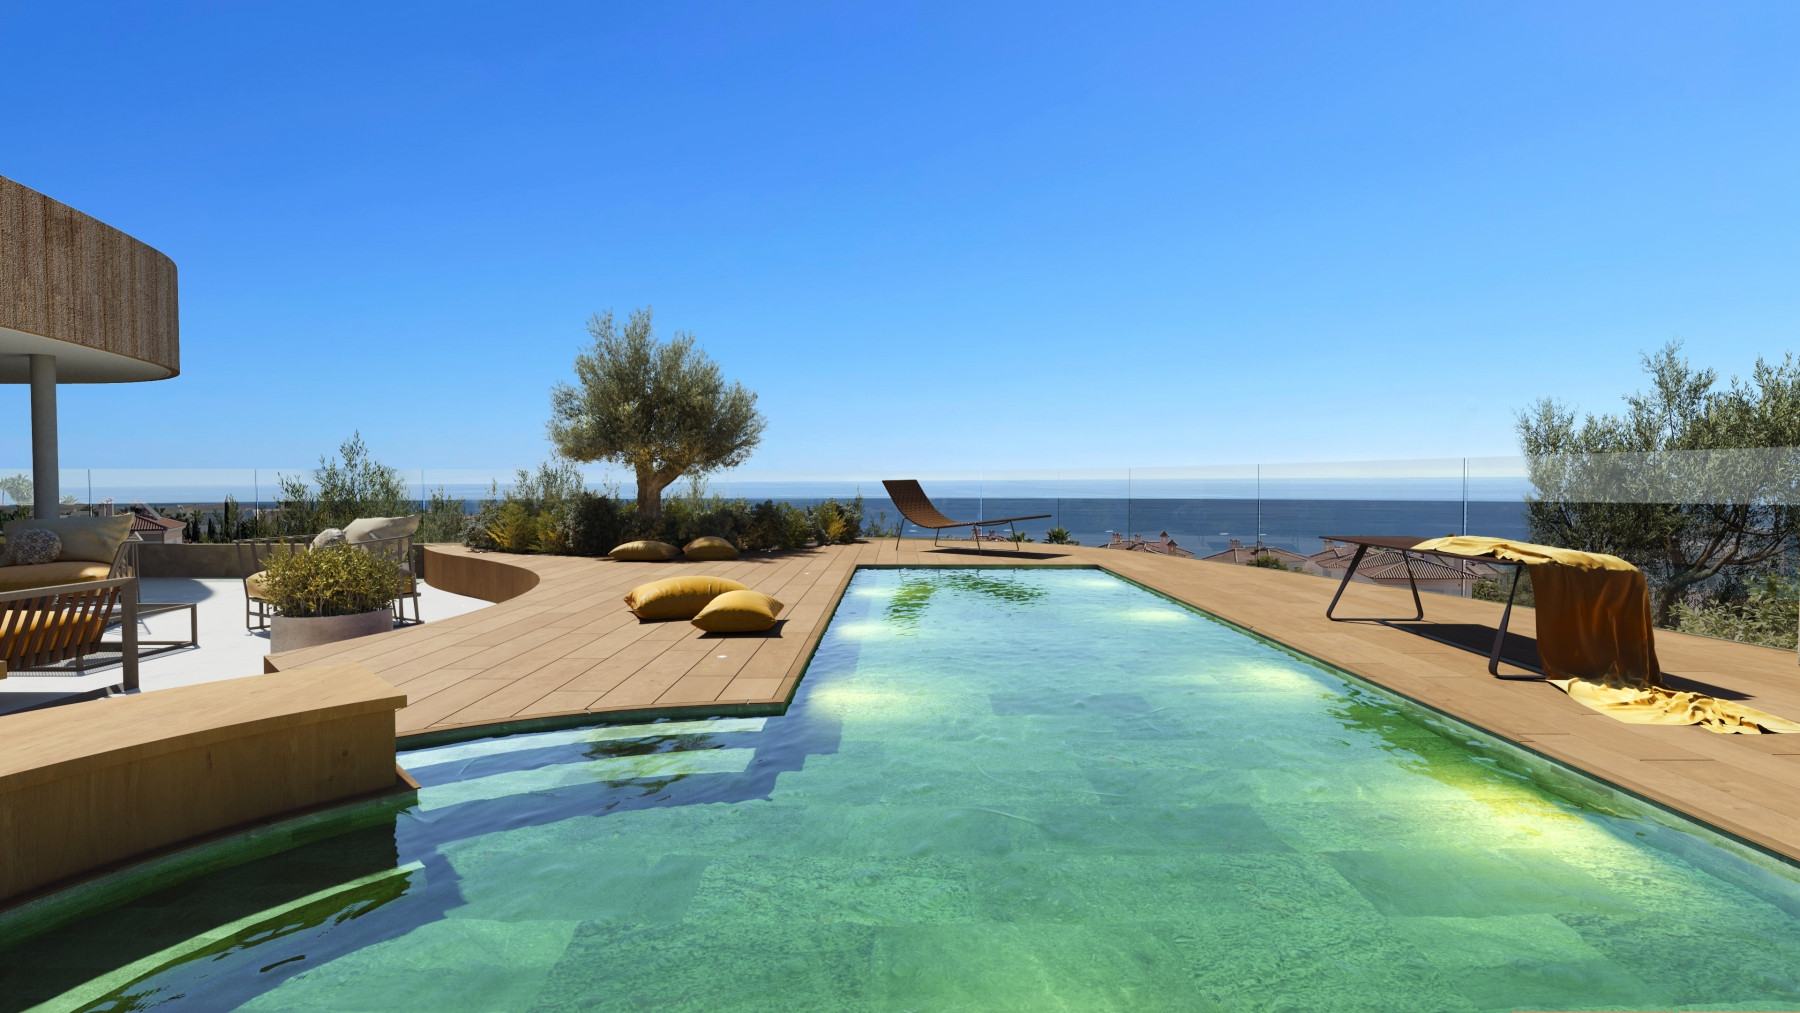 Luxury three bedroom villa with solarium and swimming pool situated in El Higueron, Fuengirola. | Image 1